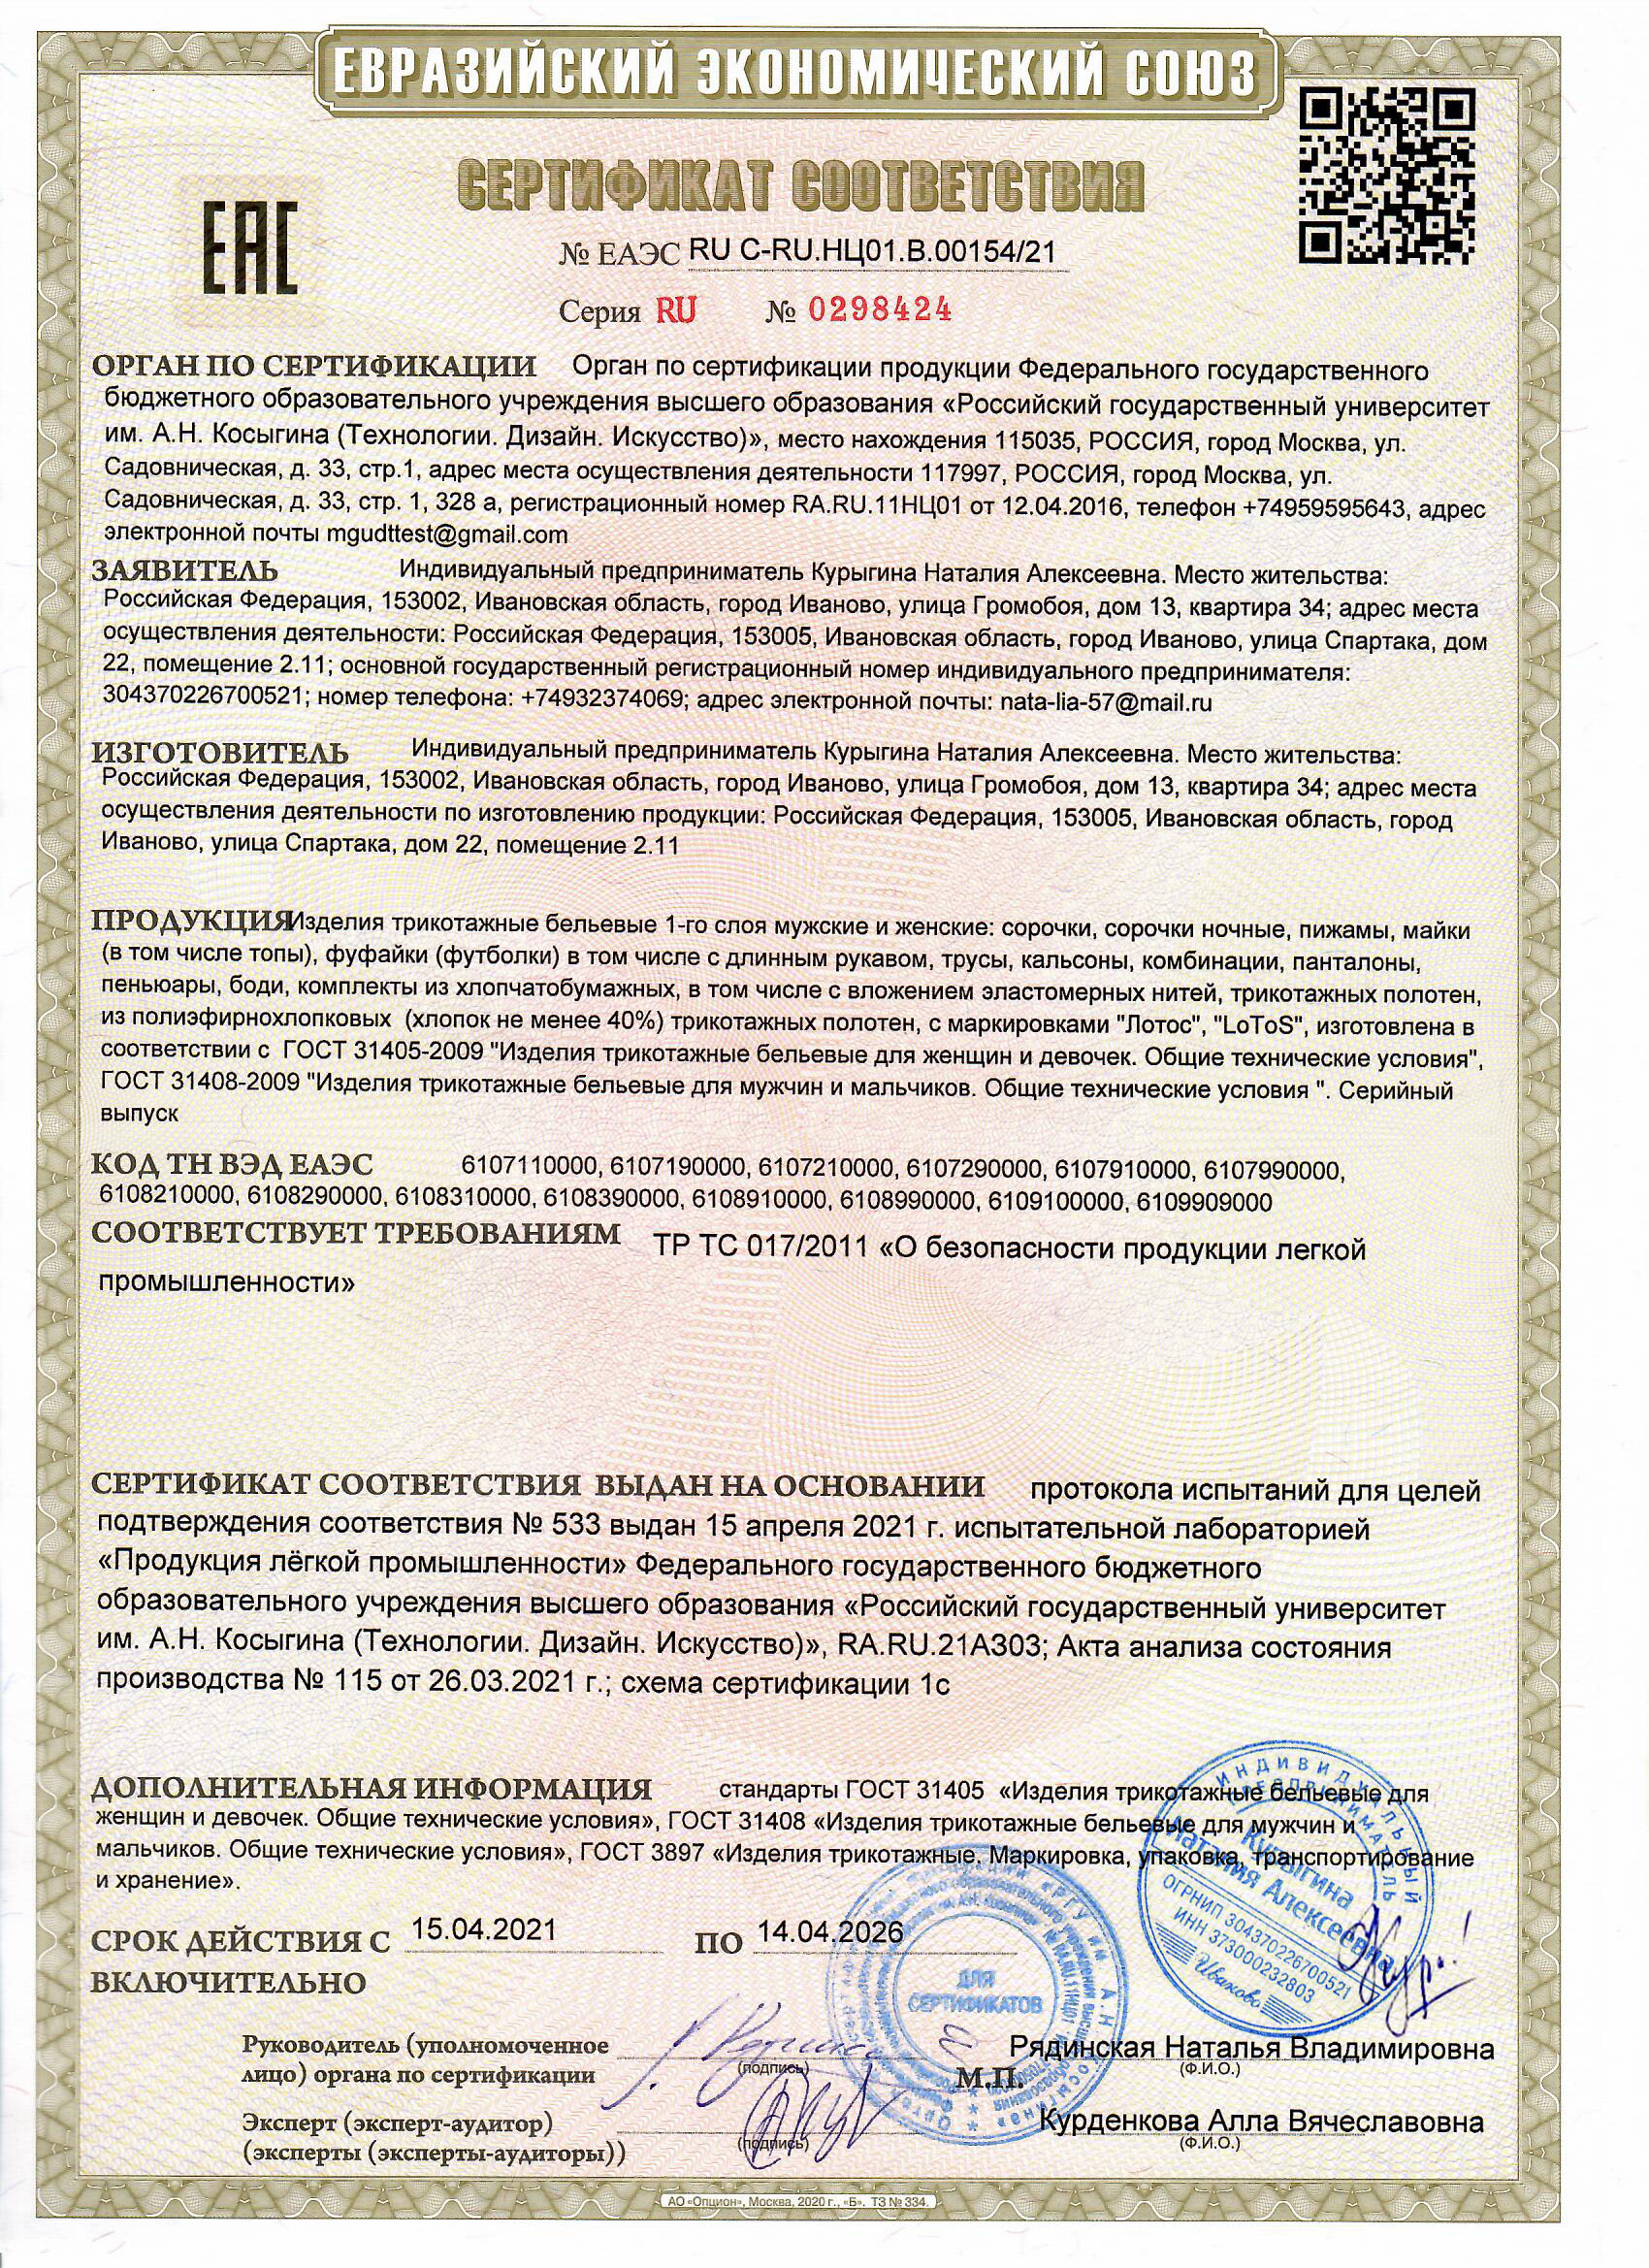 таможенный сертификат2.jpg